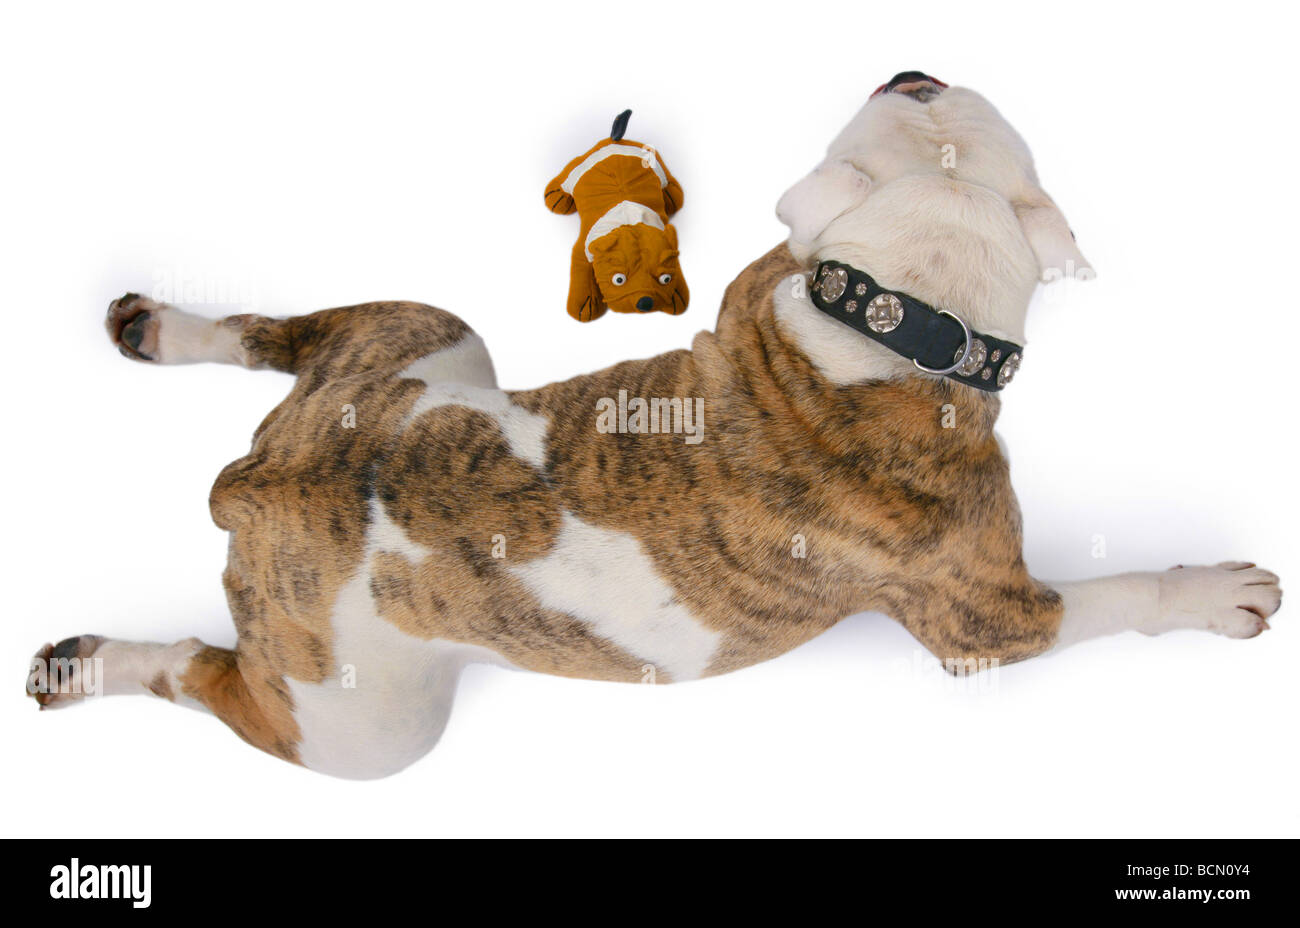 English bulldog (Canis lupus f. familiaris), lying with soft toy dog on the ground Stock Photo